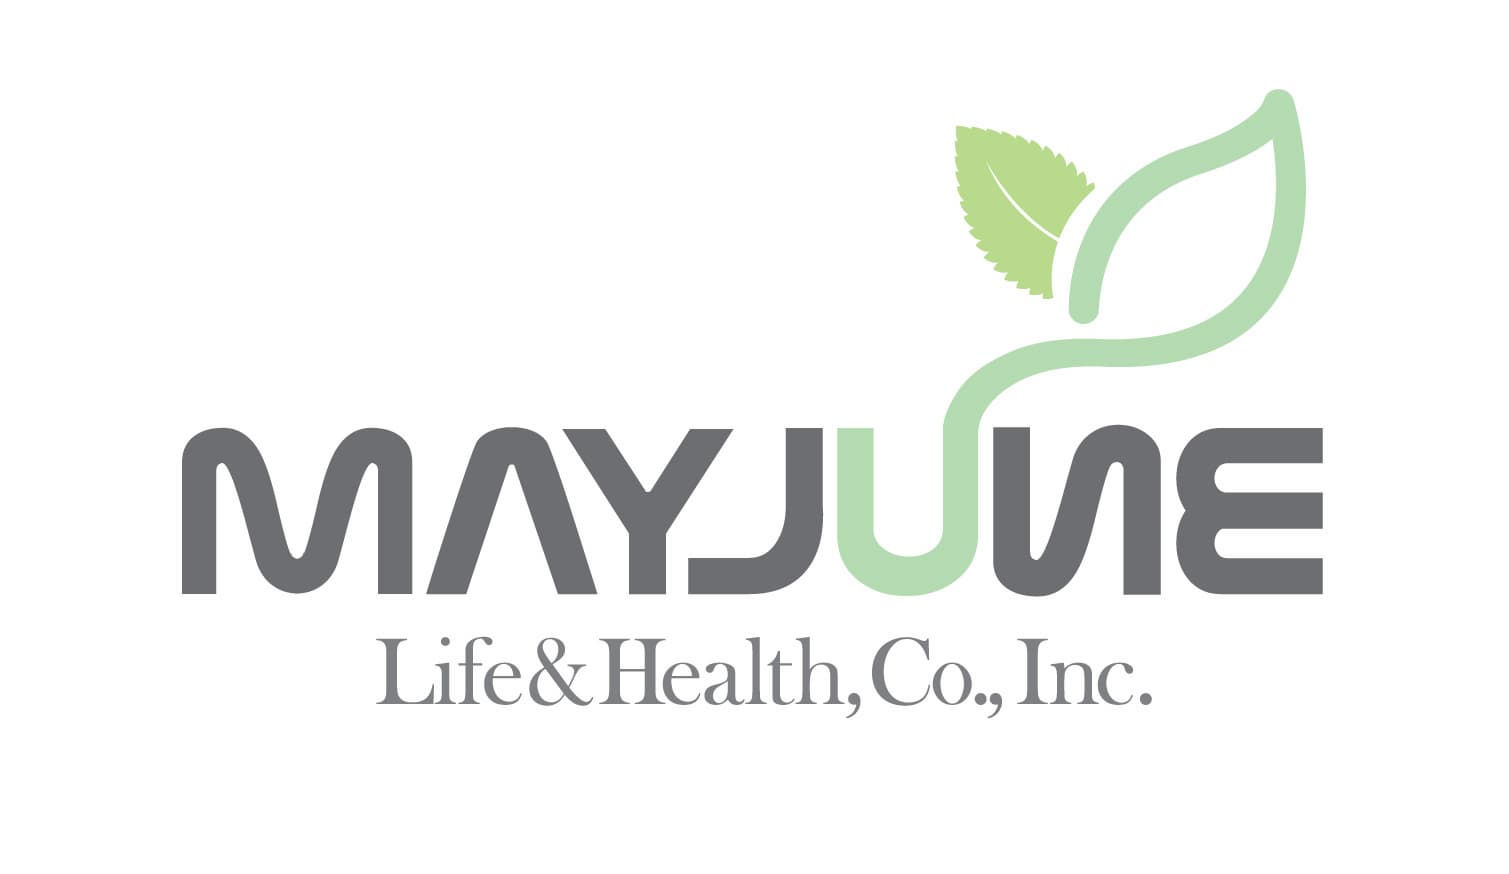 MAYJUNE LIFE&HEALTH CO., INC.